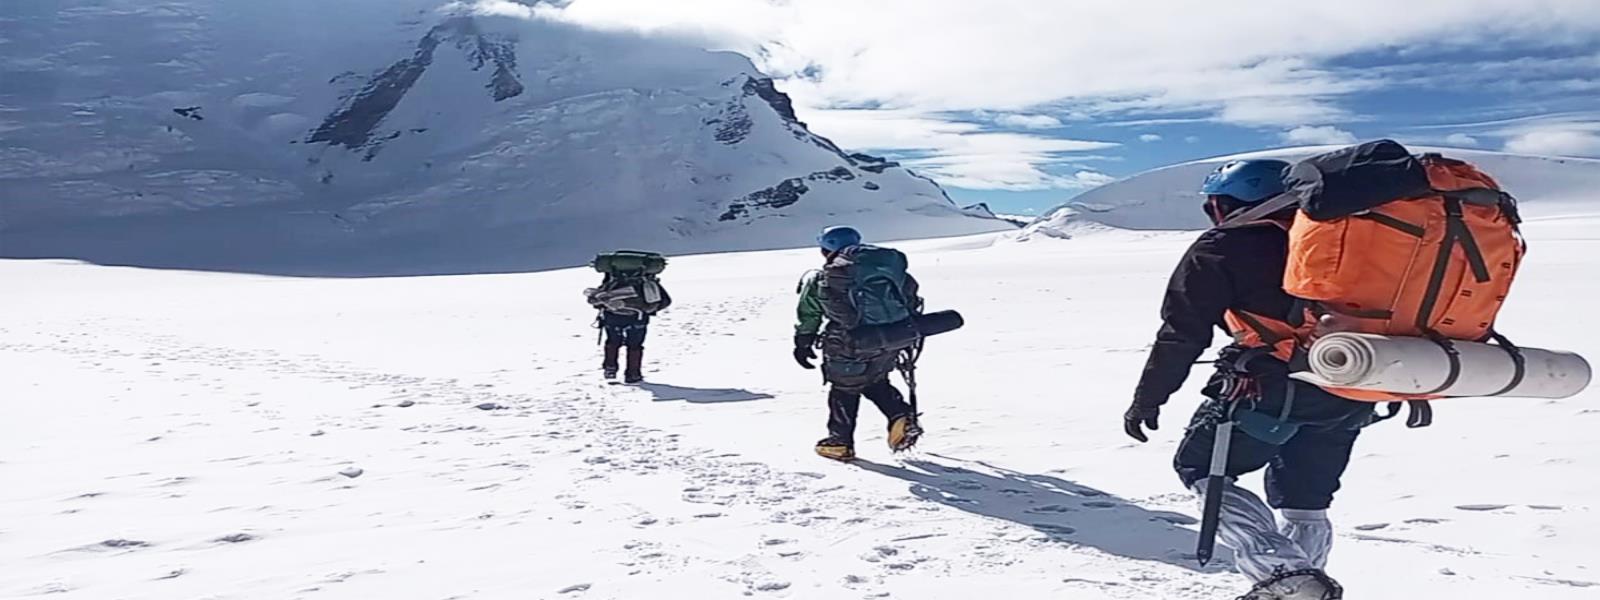 Mt. Nun Climbing Expedition